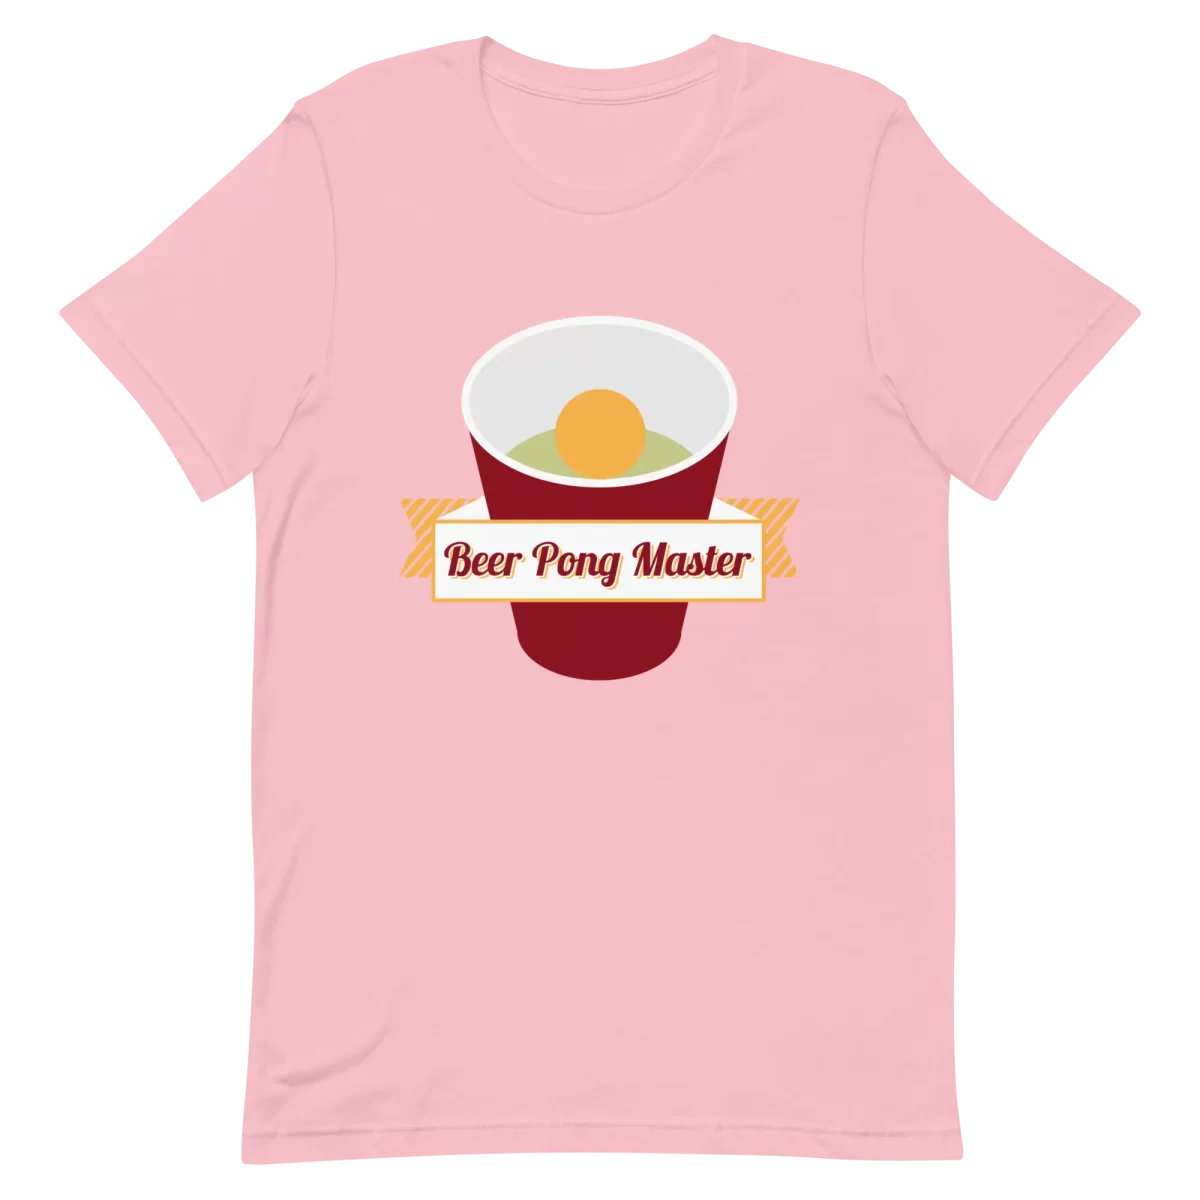 Unisex T-Shirt - Beer Pong Master - Pink